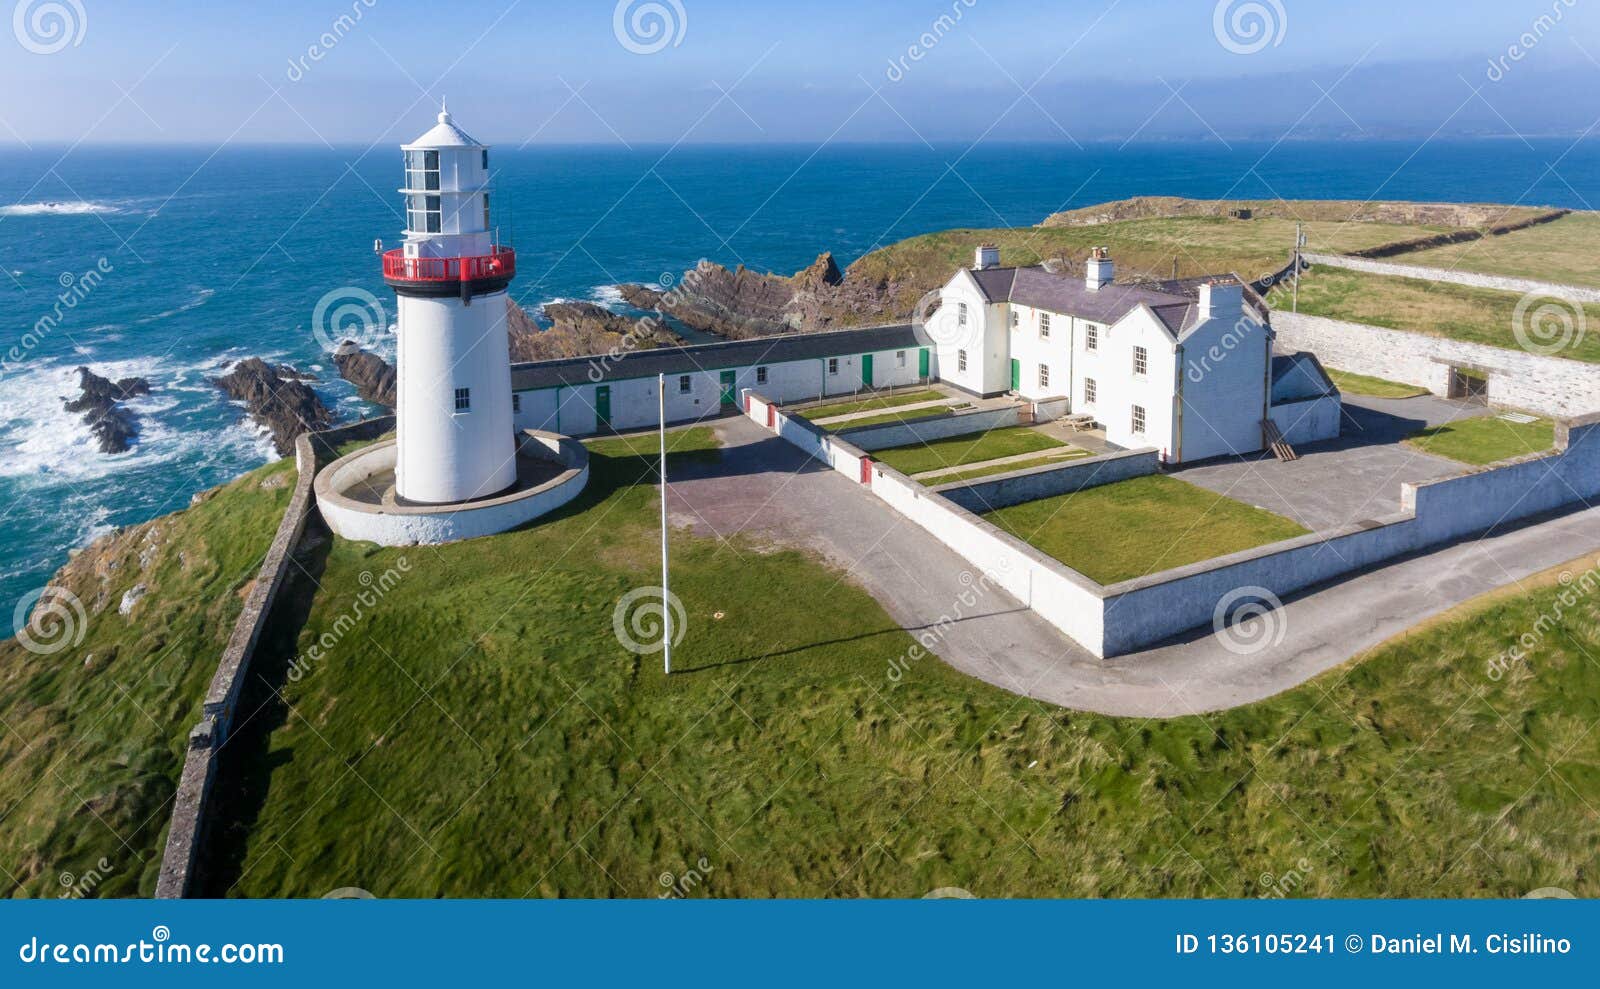 galley head lighthouse. county cork. ireland